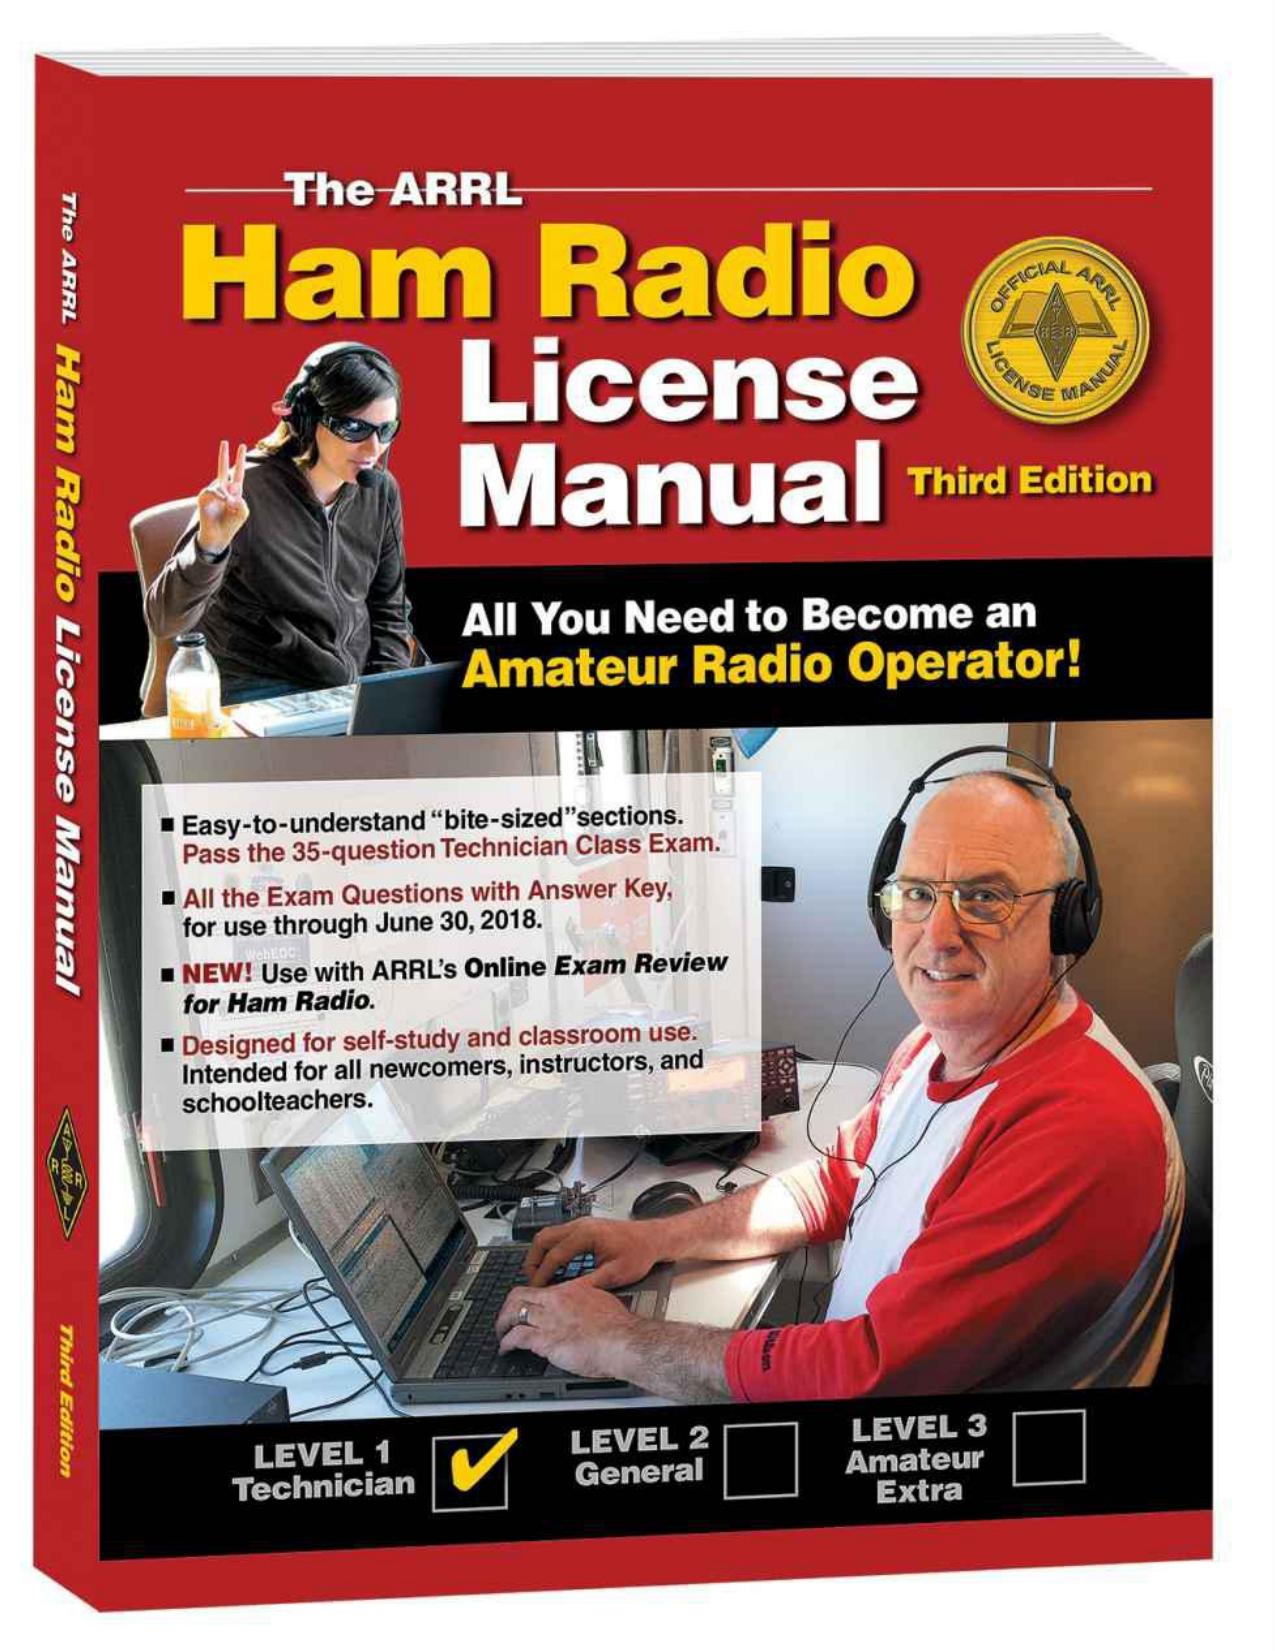 The ARRL Ham Radio License Manual by ARRL Inc